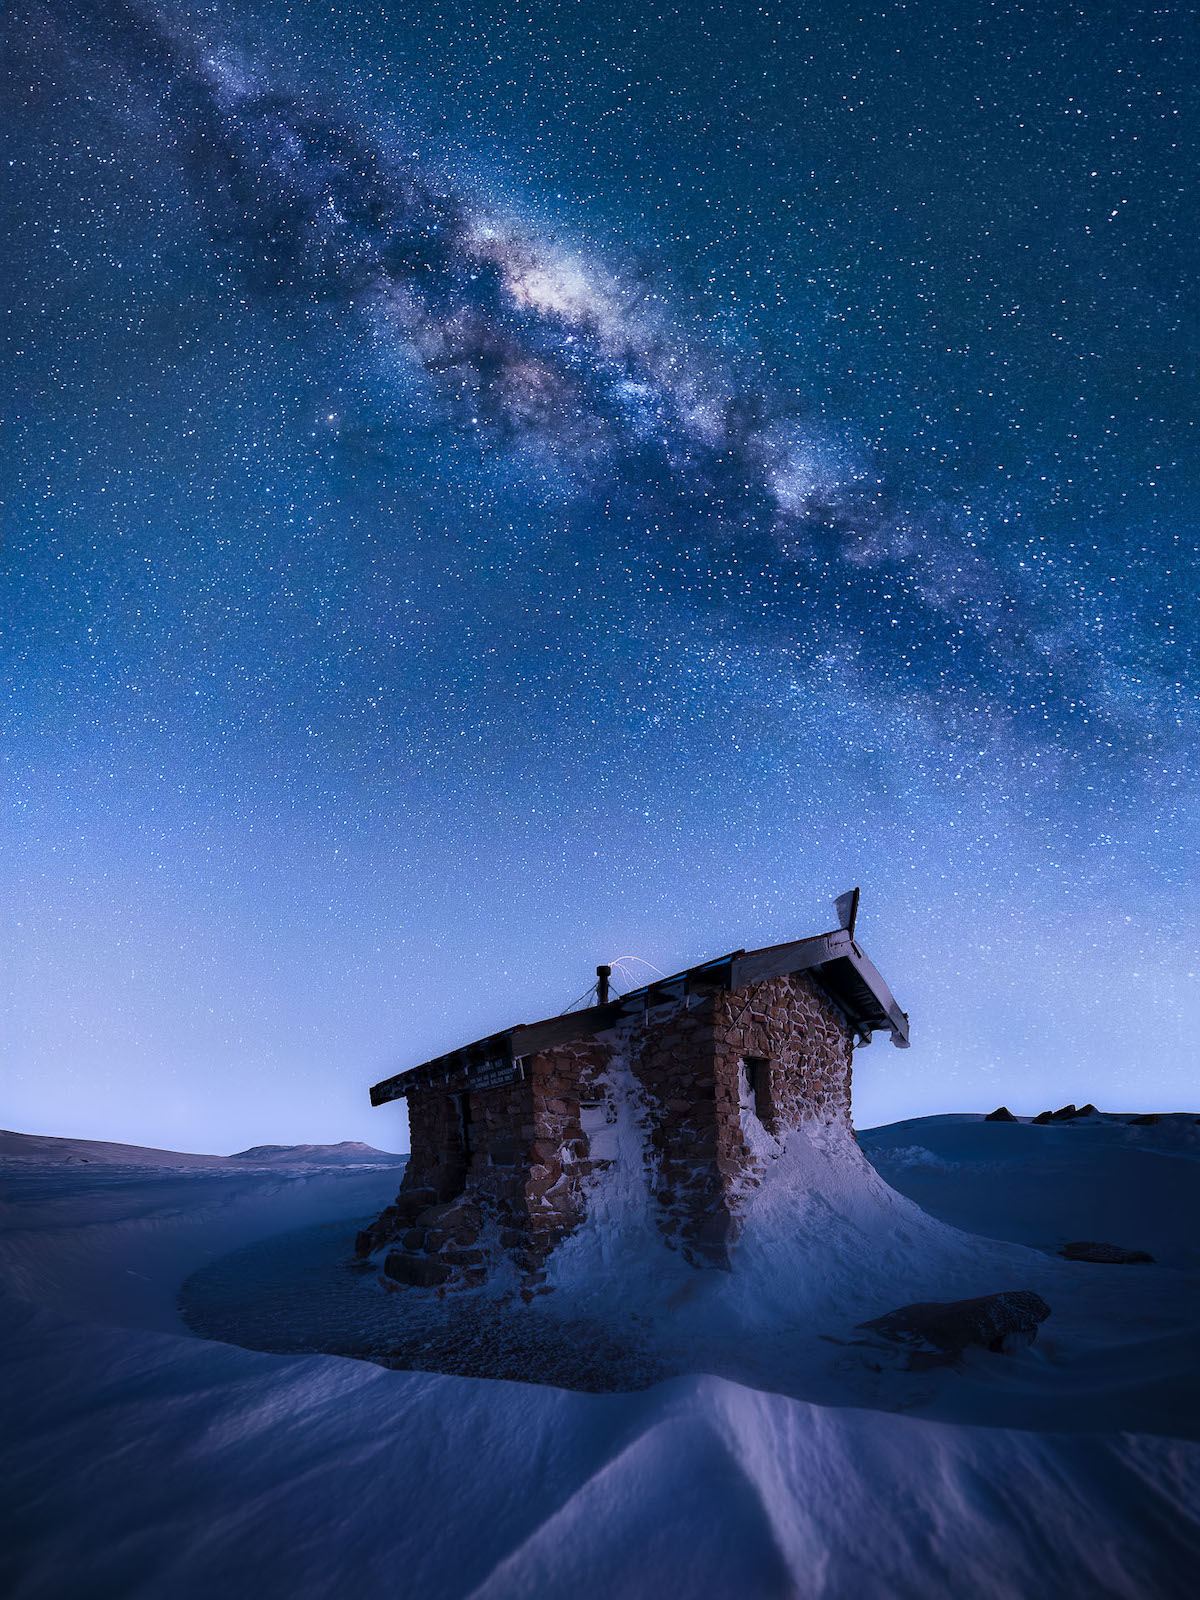 Milky Way Photographed in Kosciusko, Australia